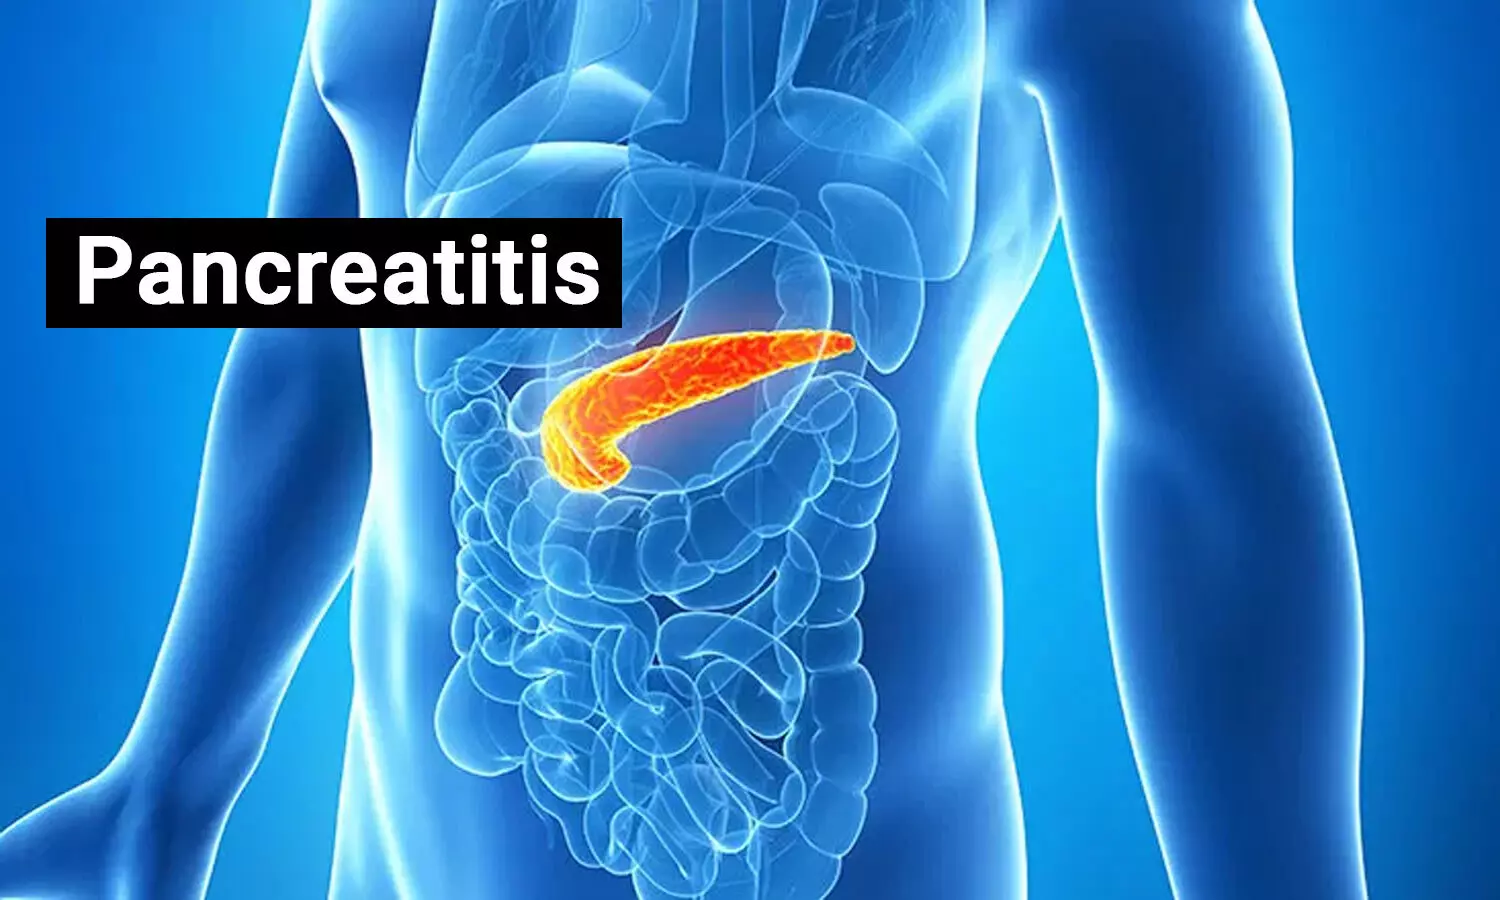 Neostigmine may reduce pancreatitis-induced intra-abdominal hypertension